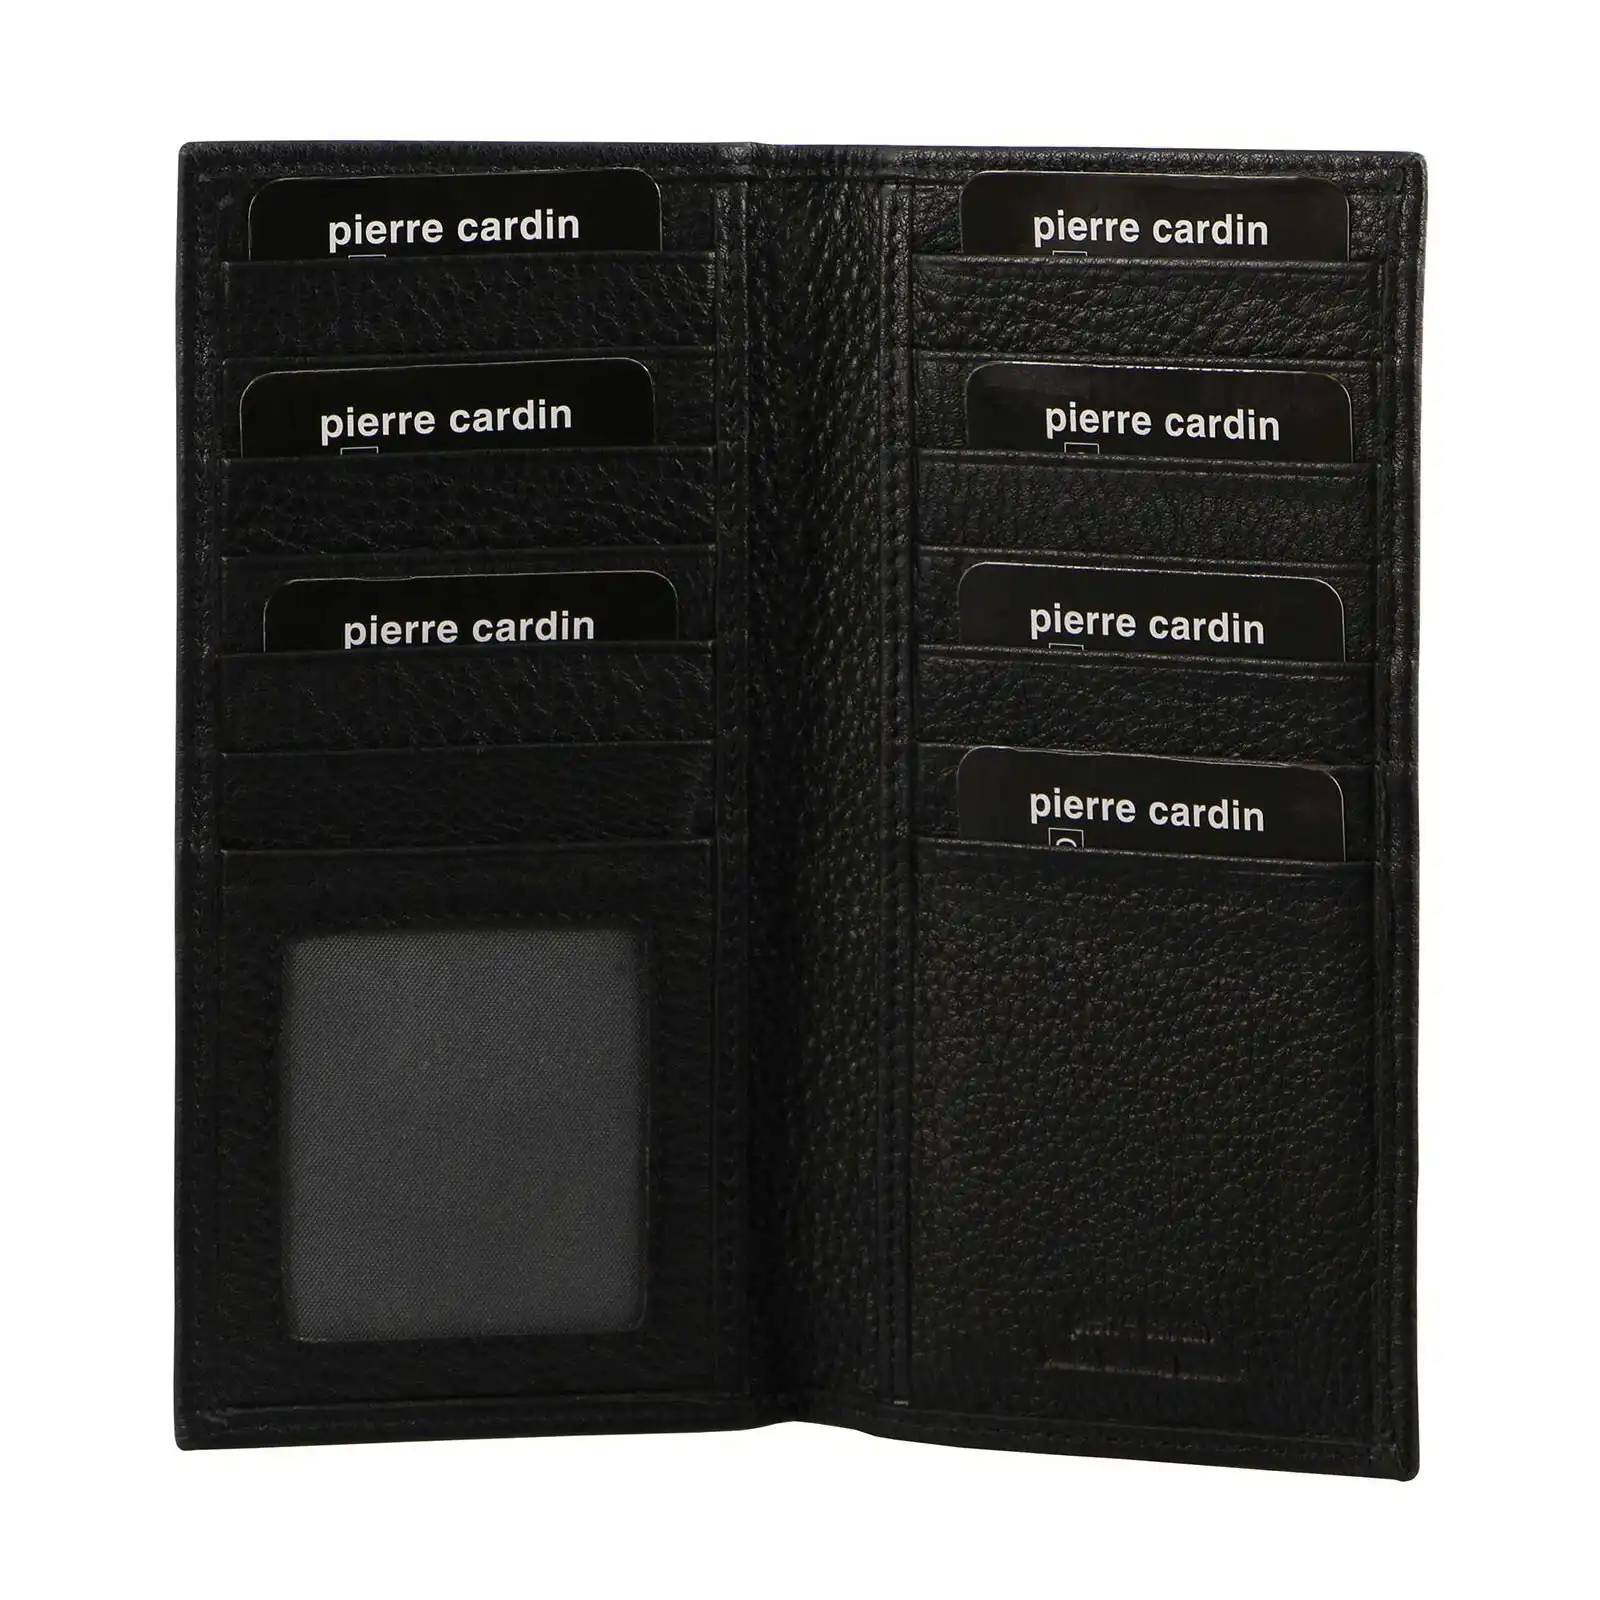 Pierre Cardin Mens Italian RFID Protected Leather Suit Wallet - Black